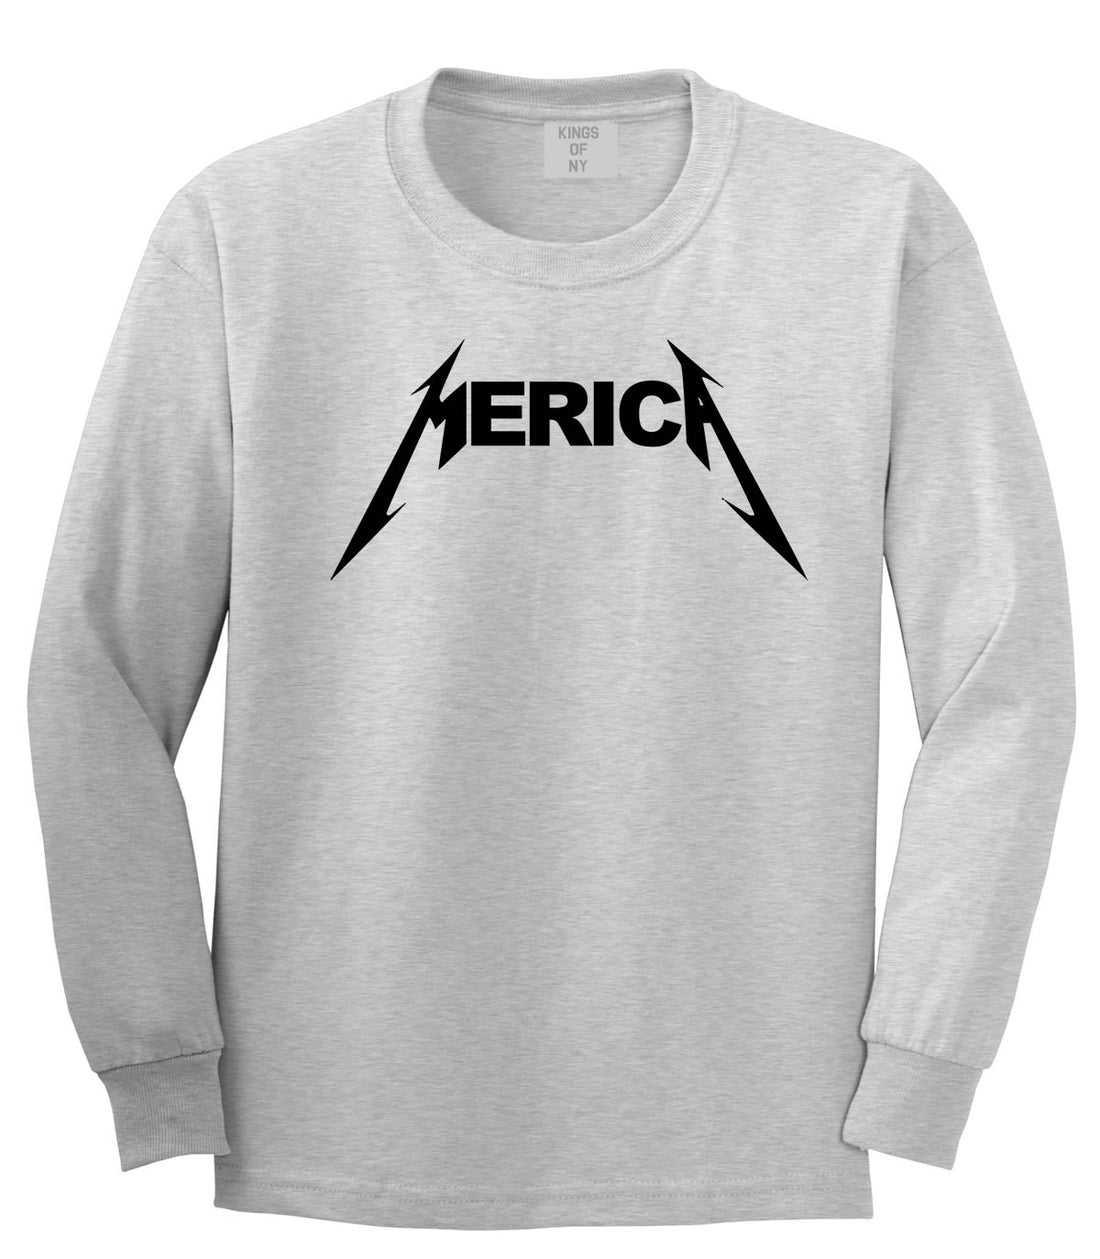 Merica Long Sleeve T-Shirt By Kings Of NY